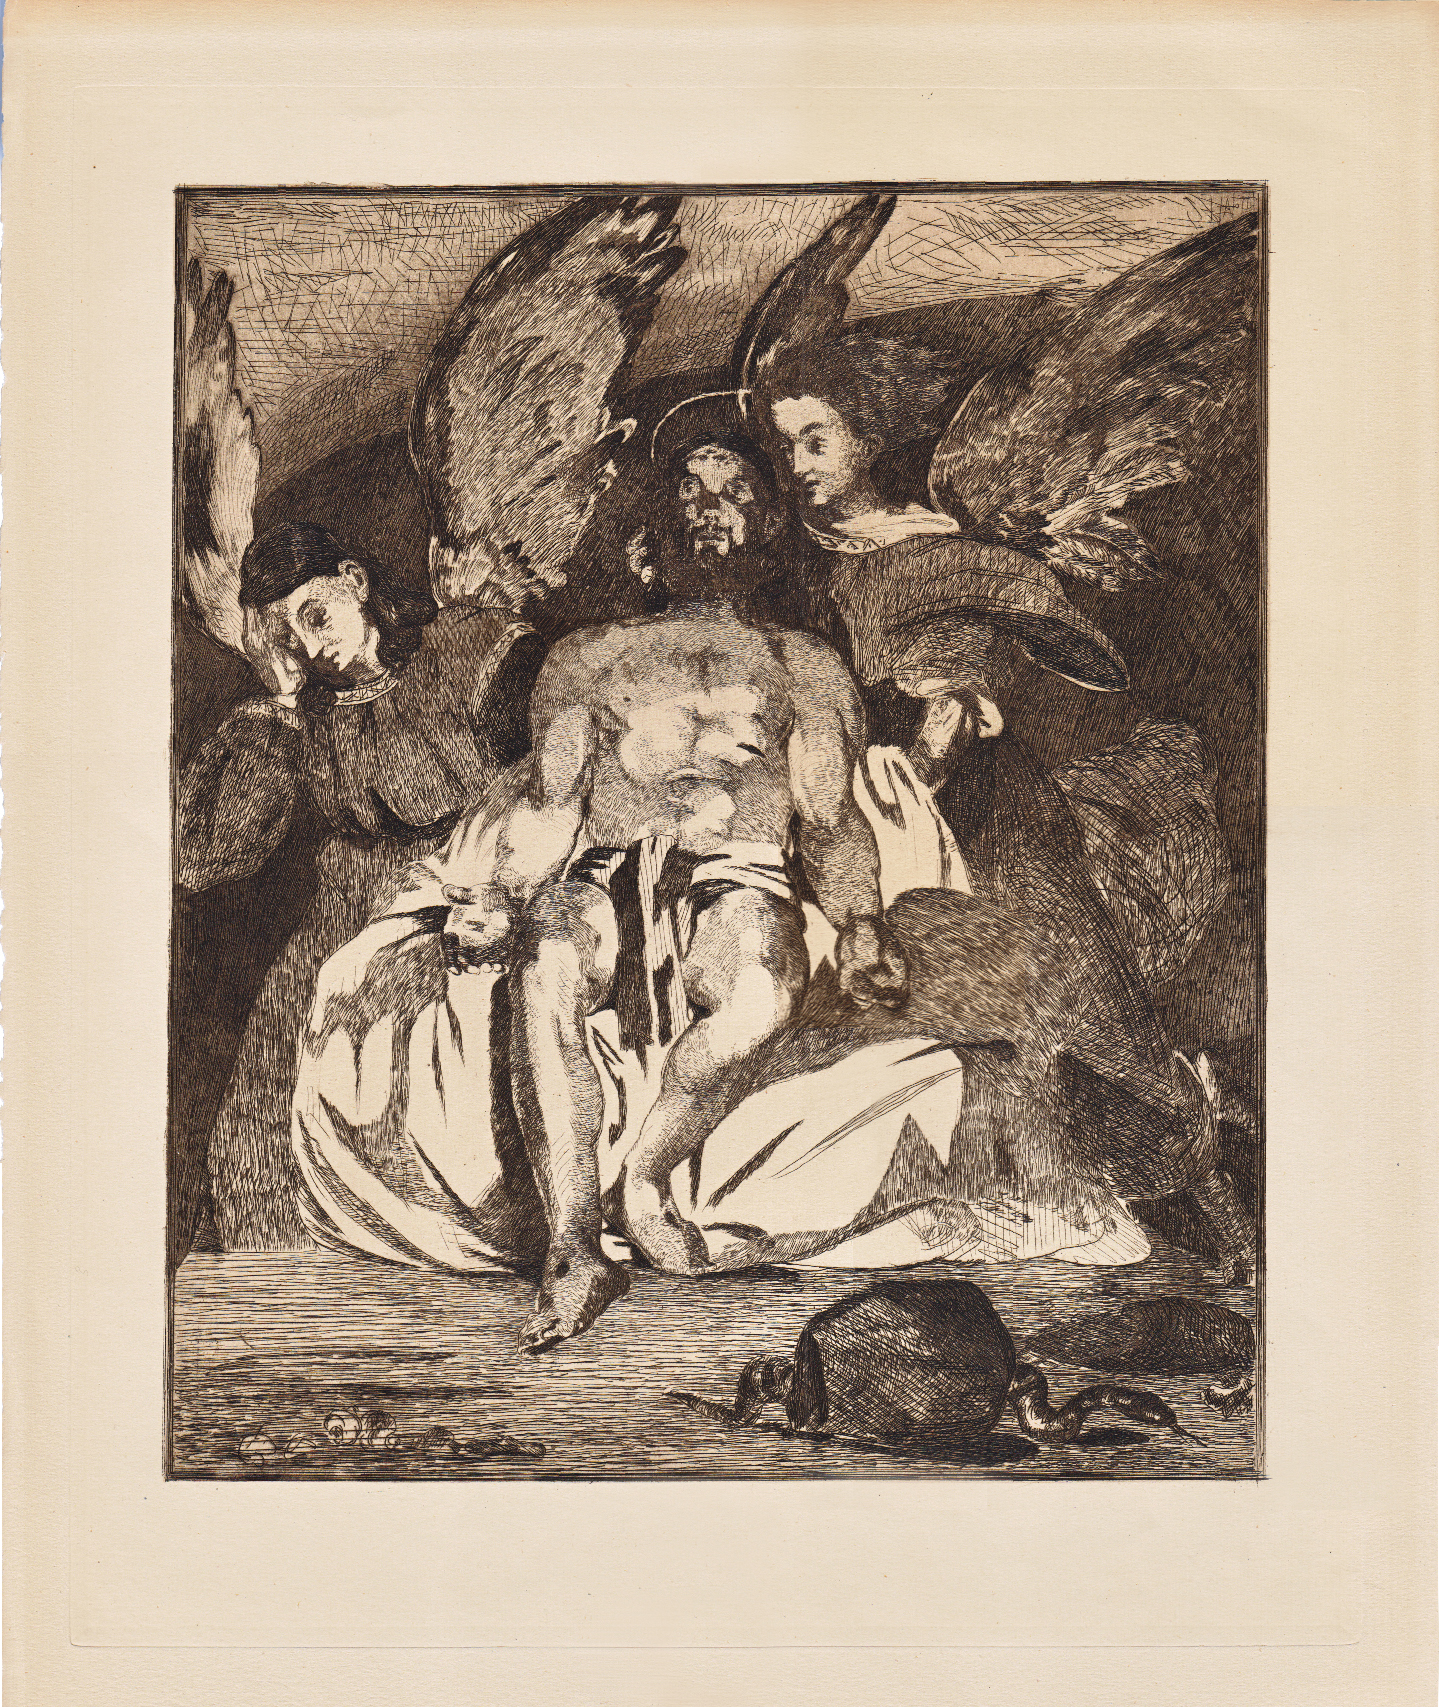 Edouard Manet, Le Christ aux Anges, etching